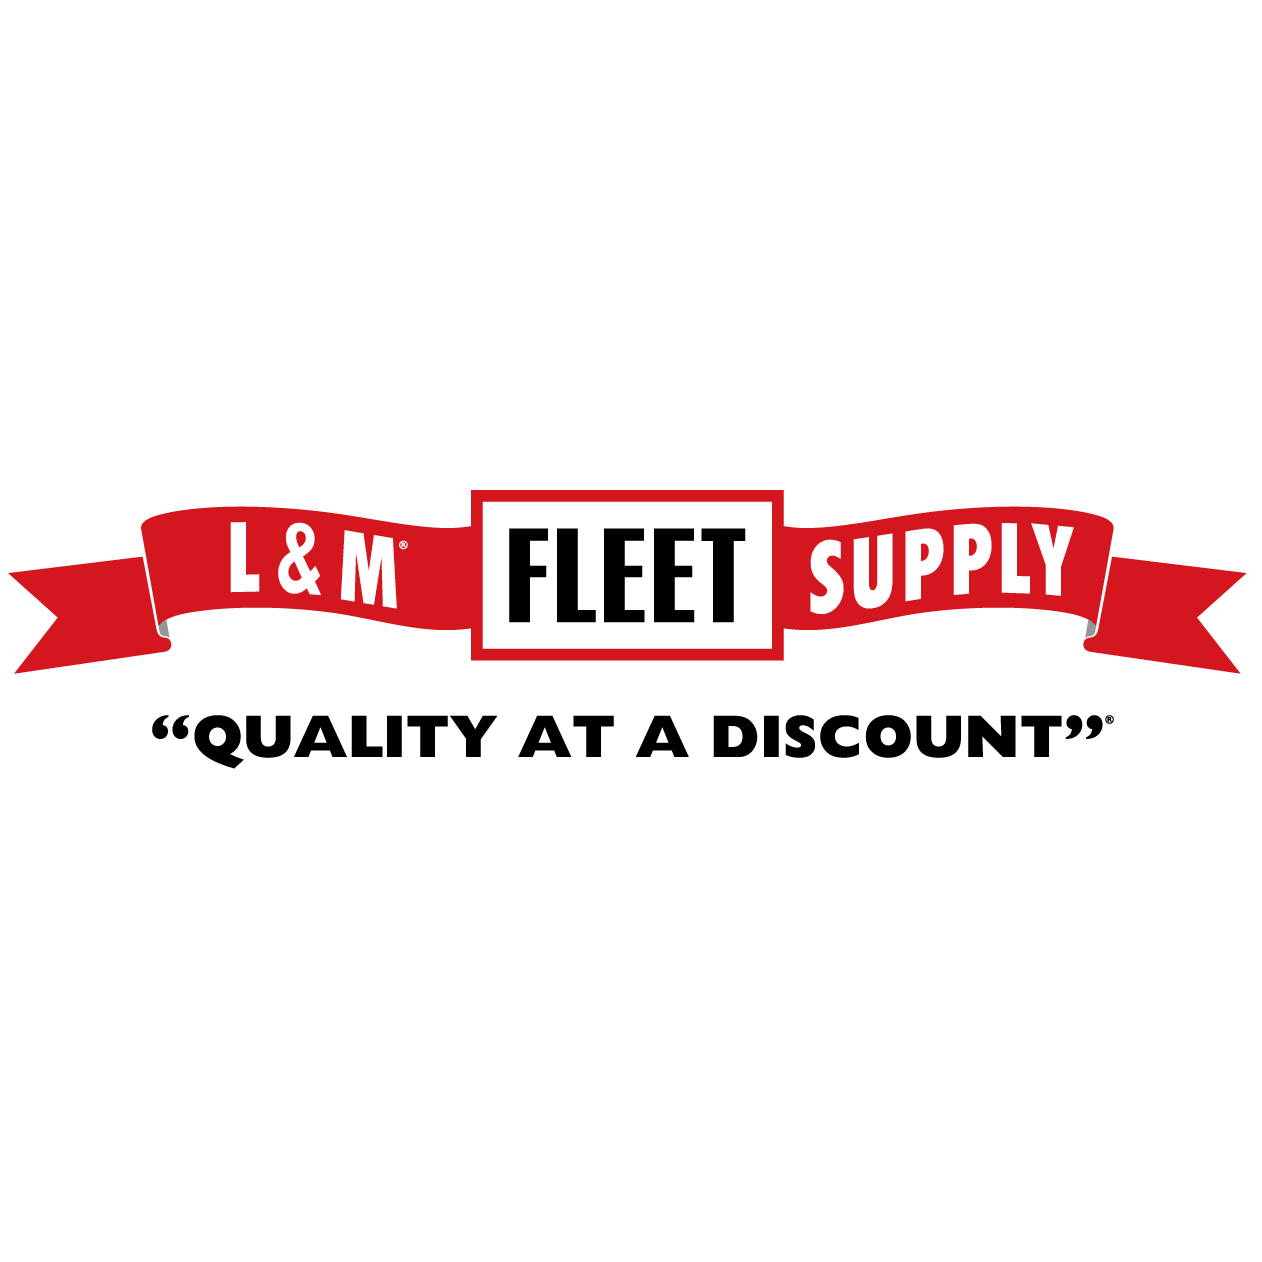 L&M Fleet Supply - Virginia, MN 55792 - (218)749-2340 | ShowMeLocal.com